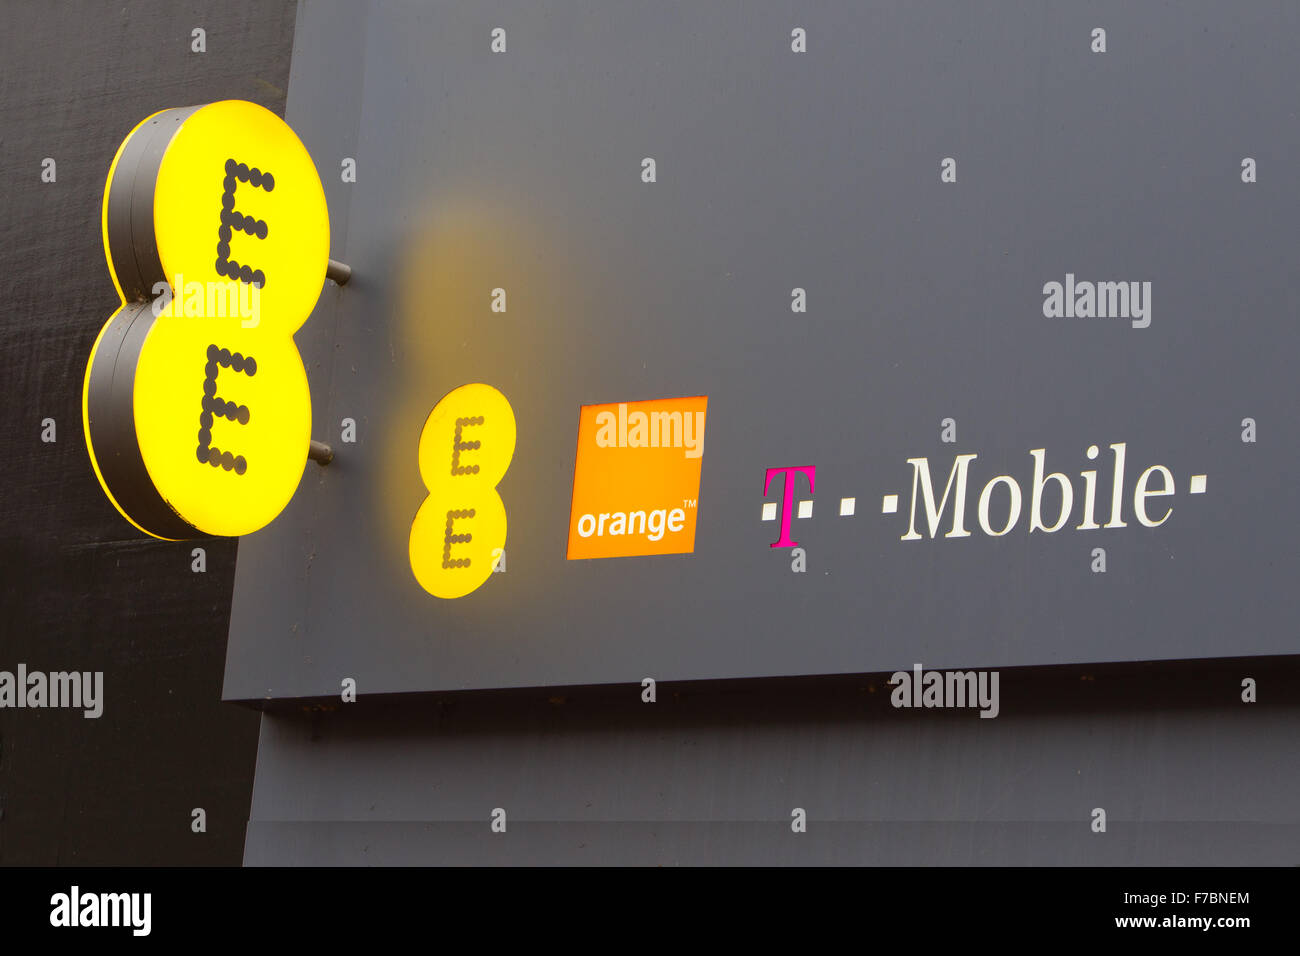 EE Orange & T Mobile mobile network brand logos on high street Stock Photo